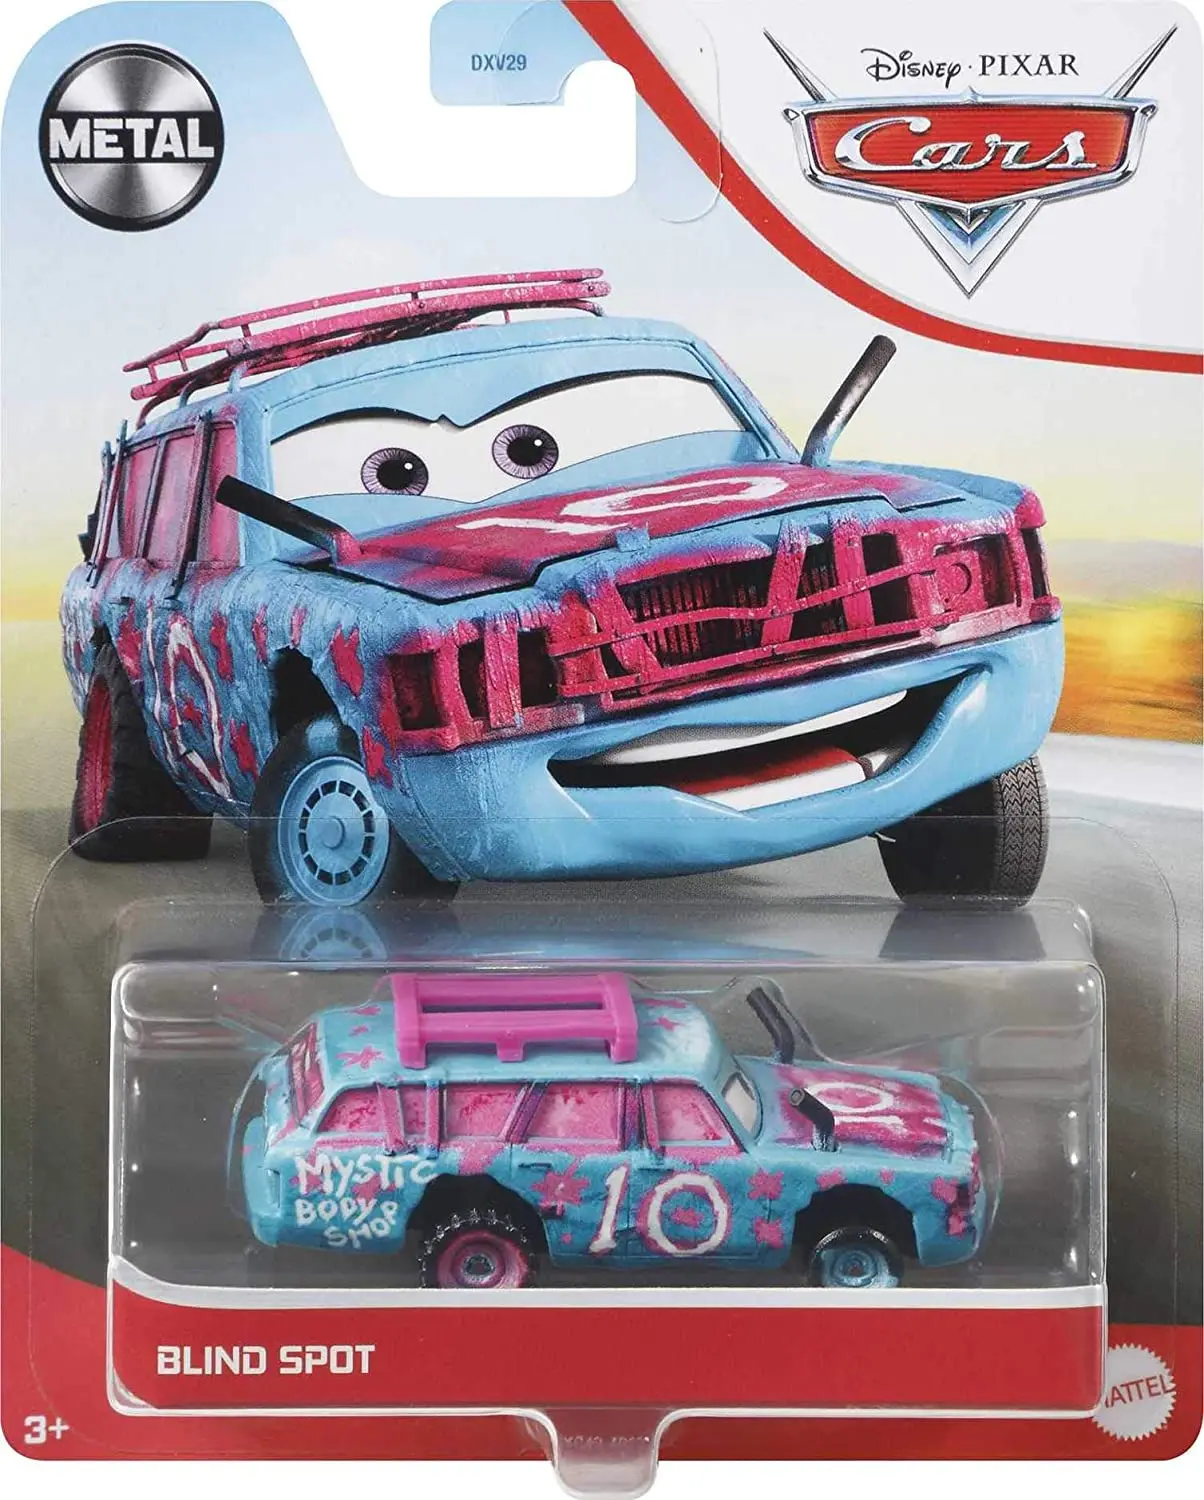 

Mattel Disney Pixar Cars 3 BLIND SPOT 1/55 Diecast Metal Car Collection Toy Alloy Boy Kid Birhtday Gift For Collectors